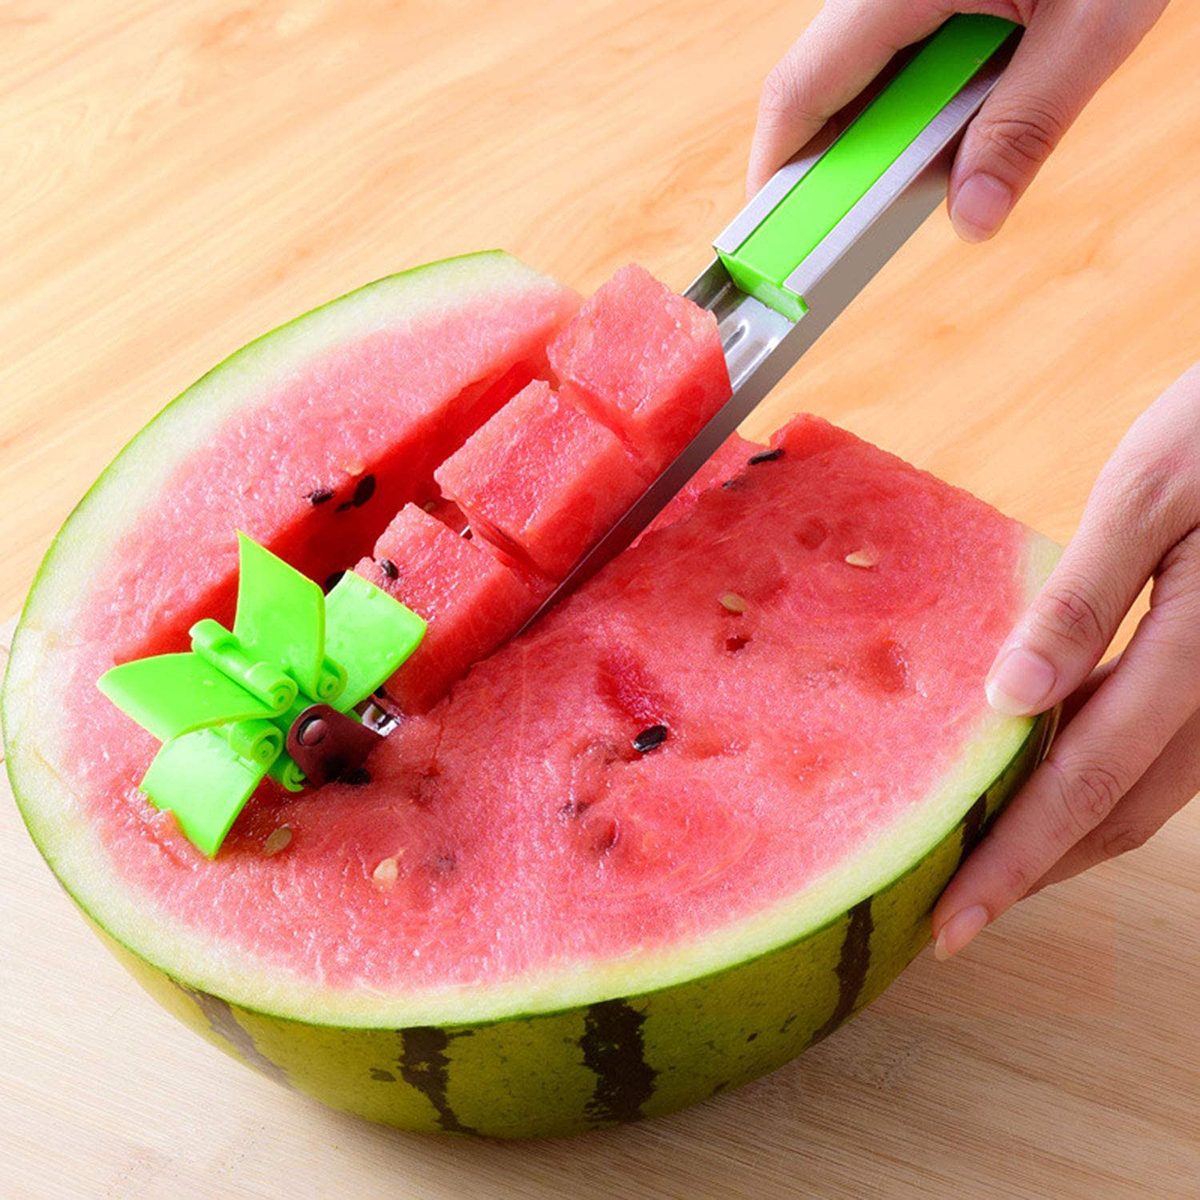 https://www.tasteofhome.com/wp-content/uploads/2020/07/watermelon-cutter-QTR-1200x1200.jpg?fit=696%2C696